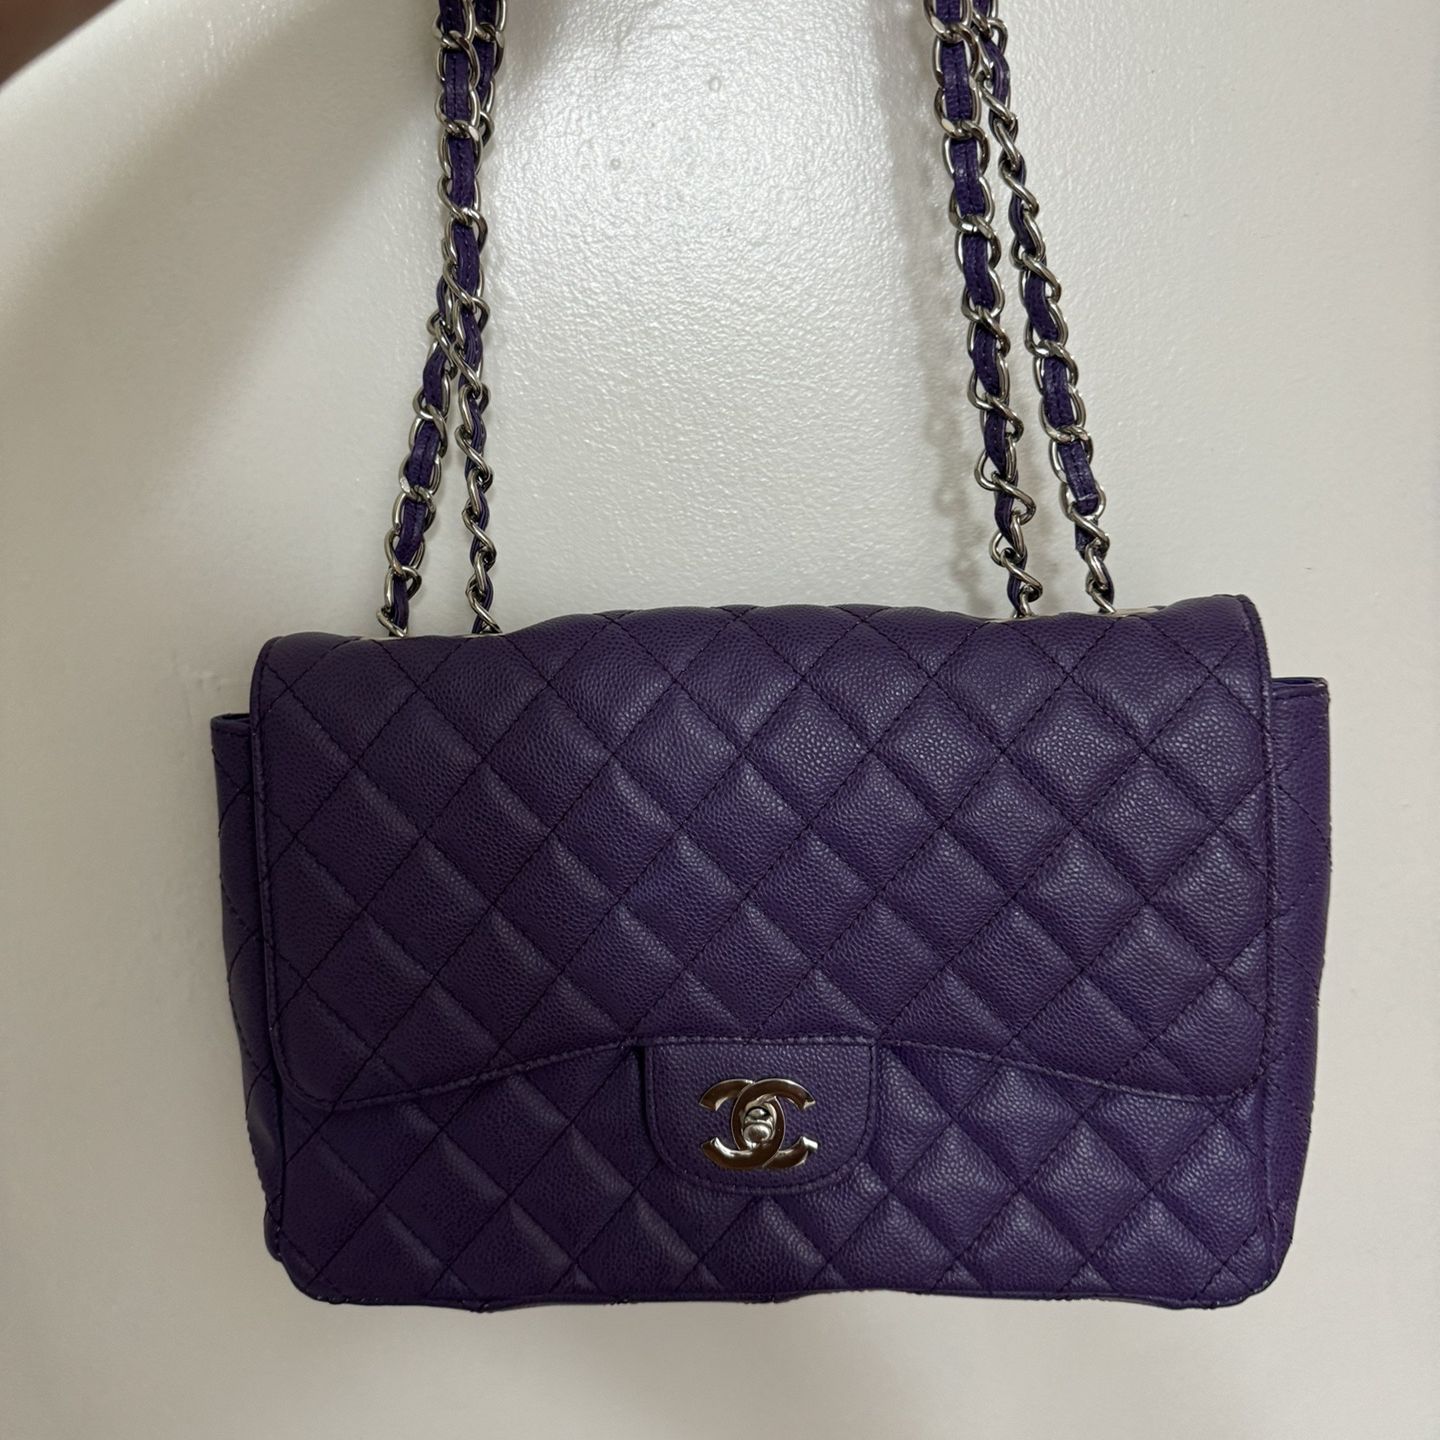 Purple Chanel Purse